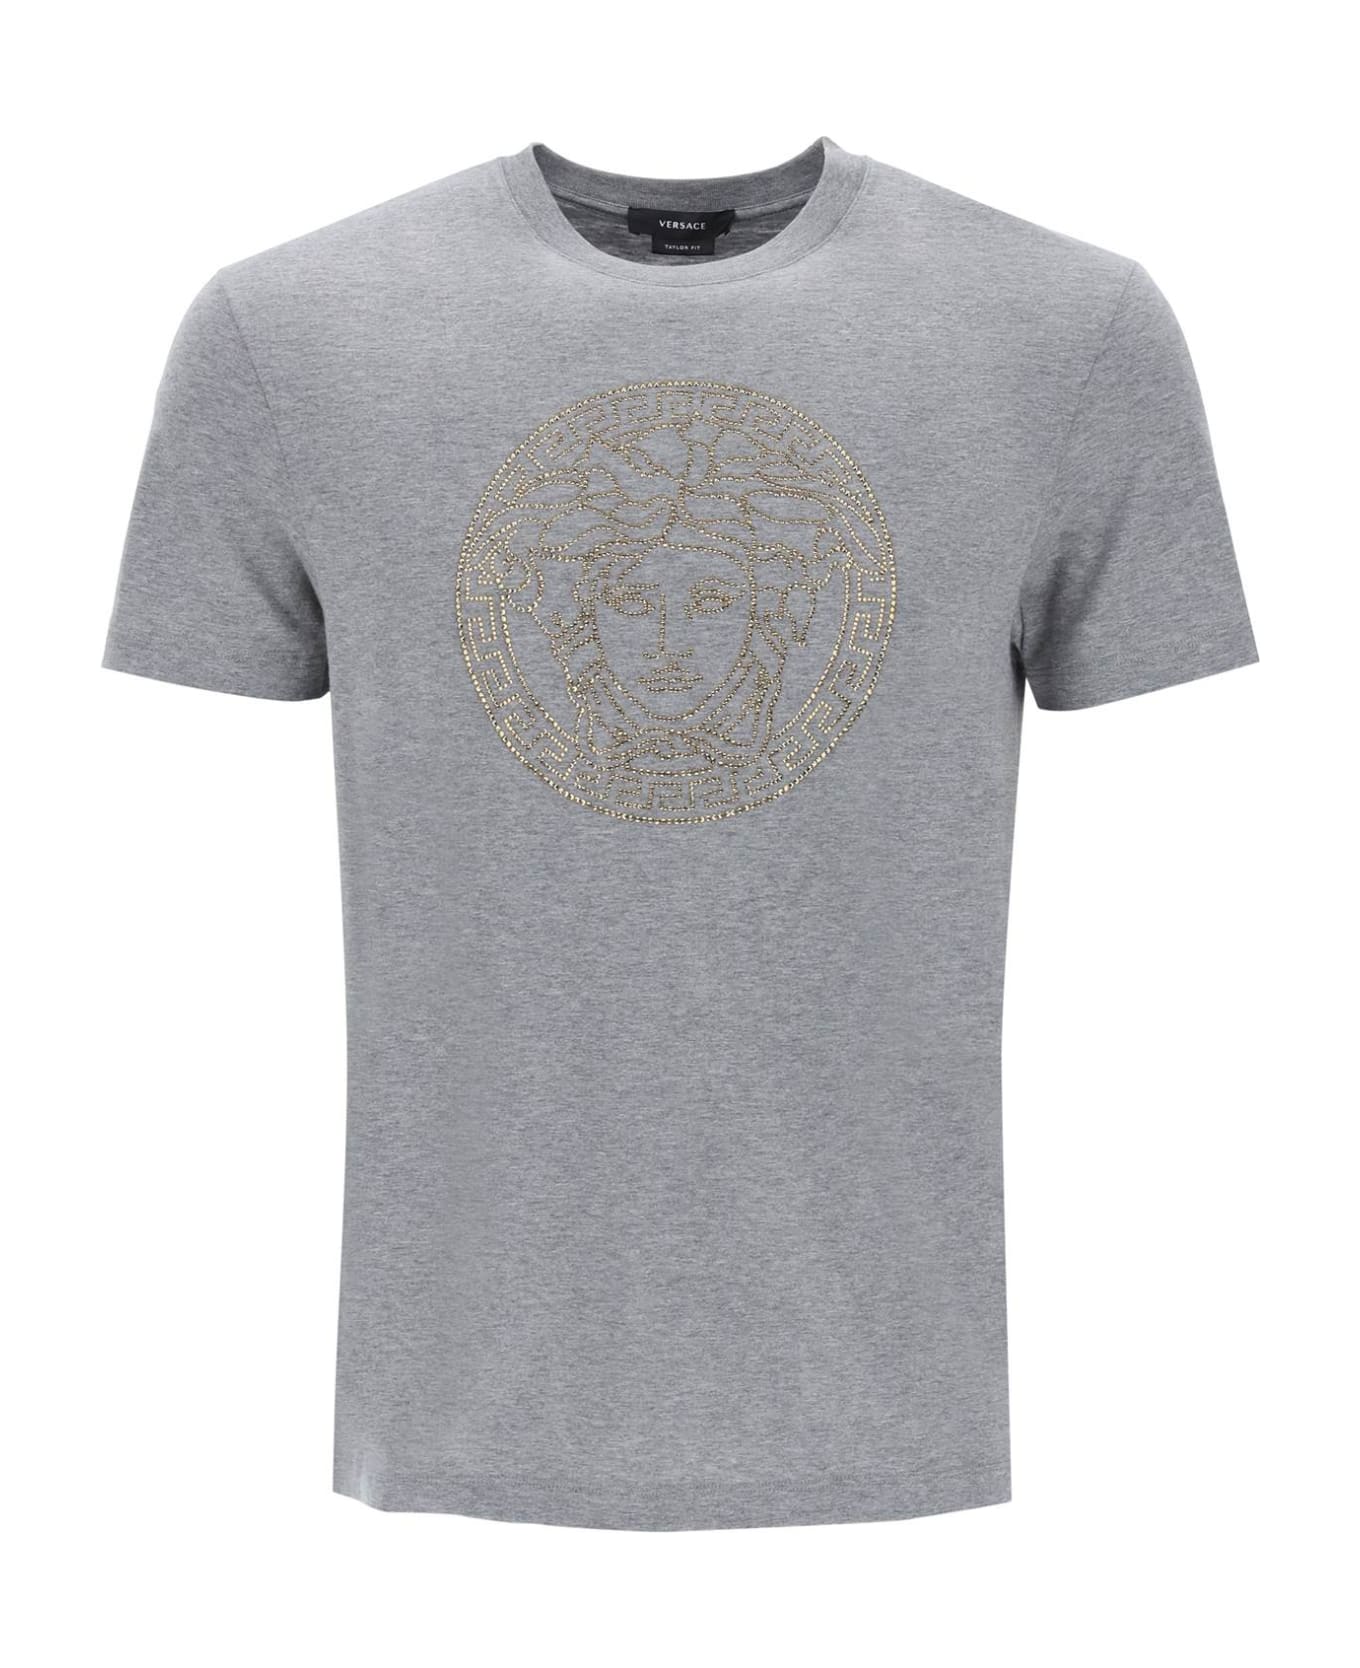 Versace Rhinestones Medusa T-shirt - MEDIUM GREY (Grey)